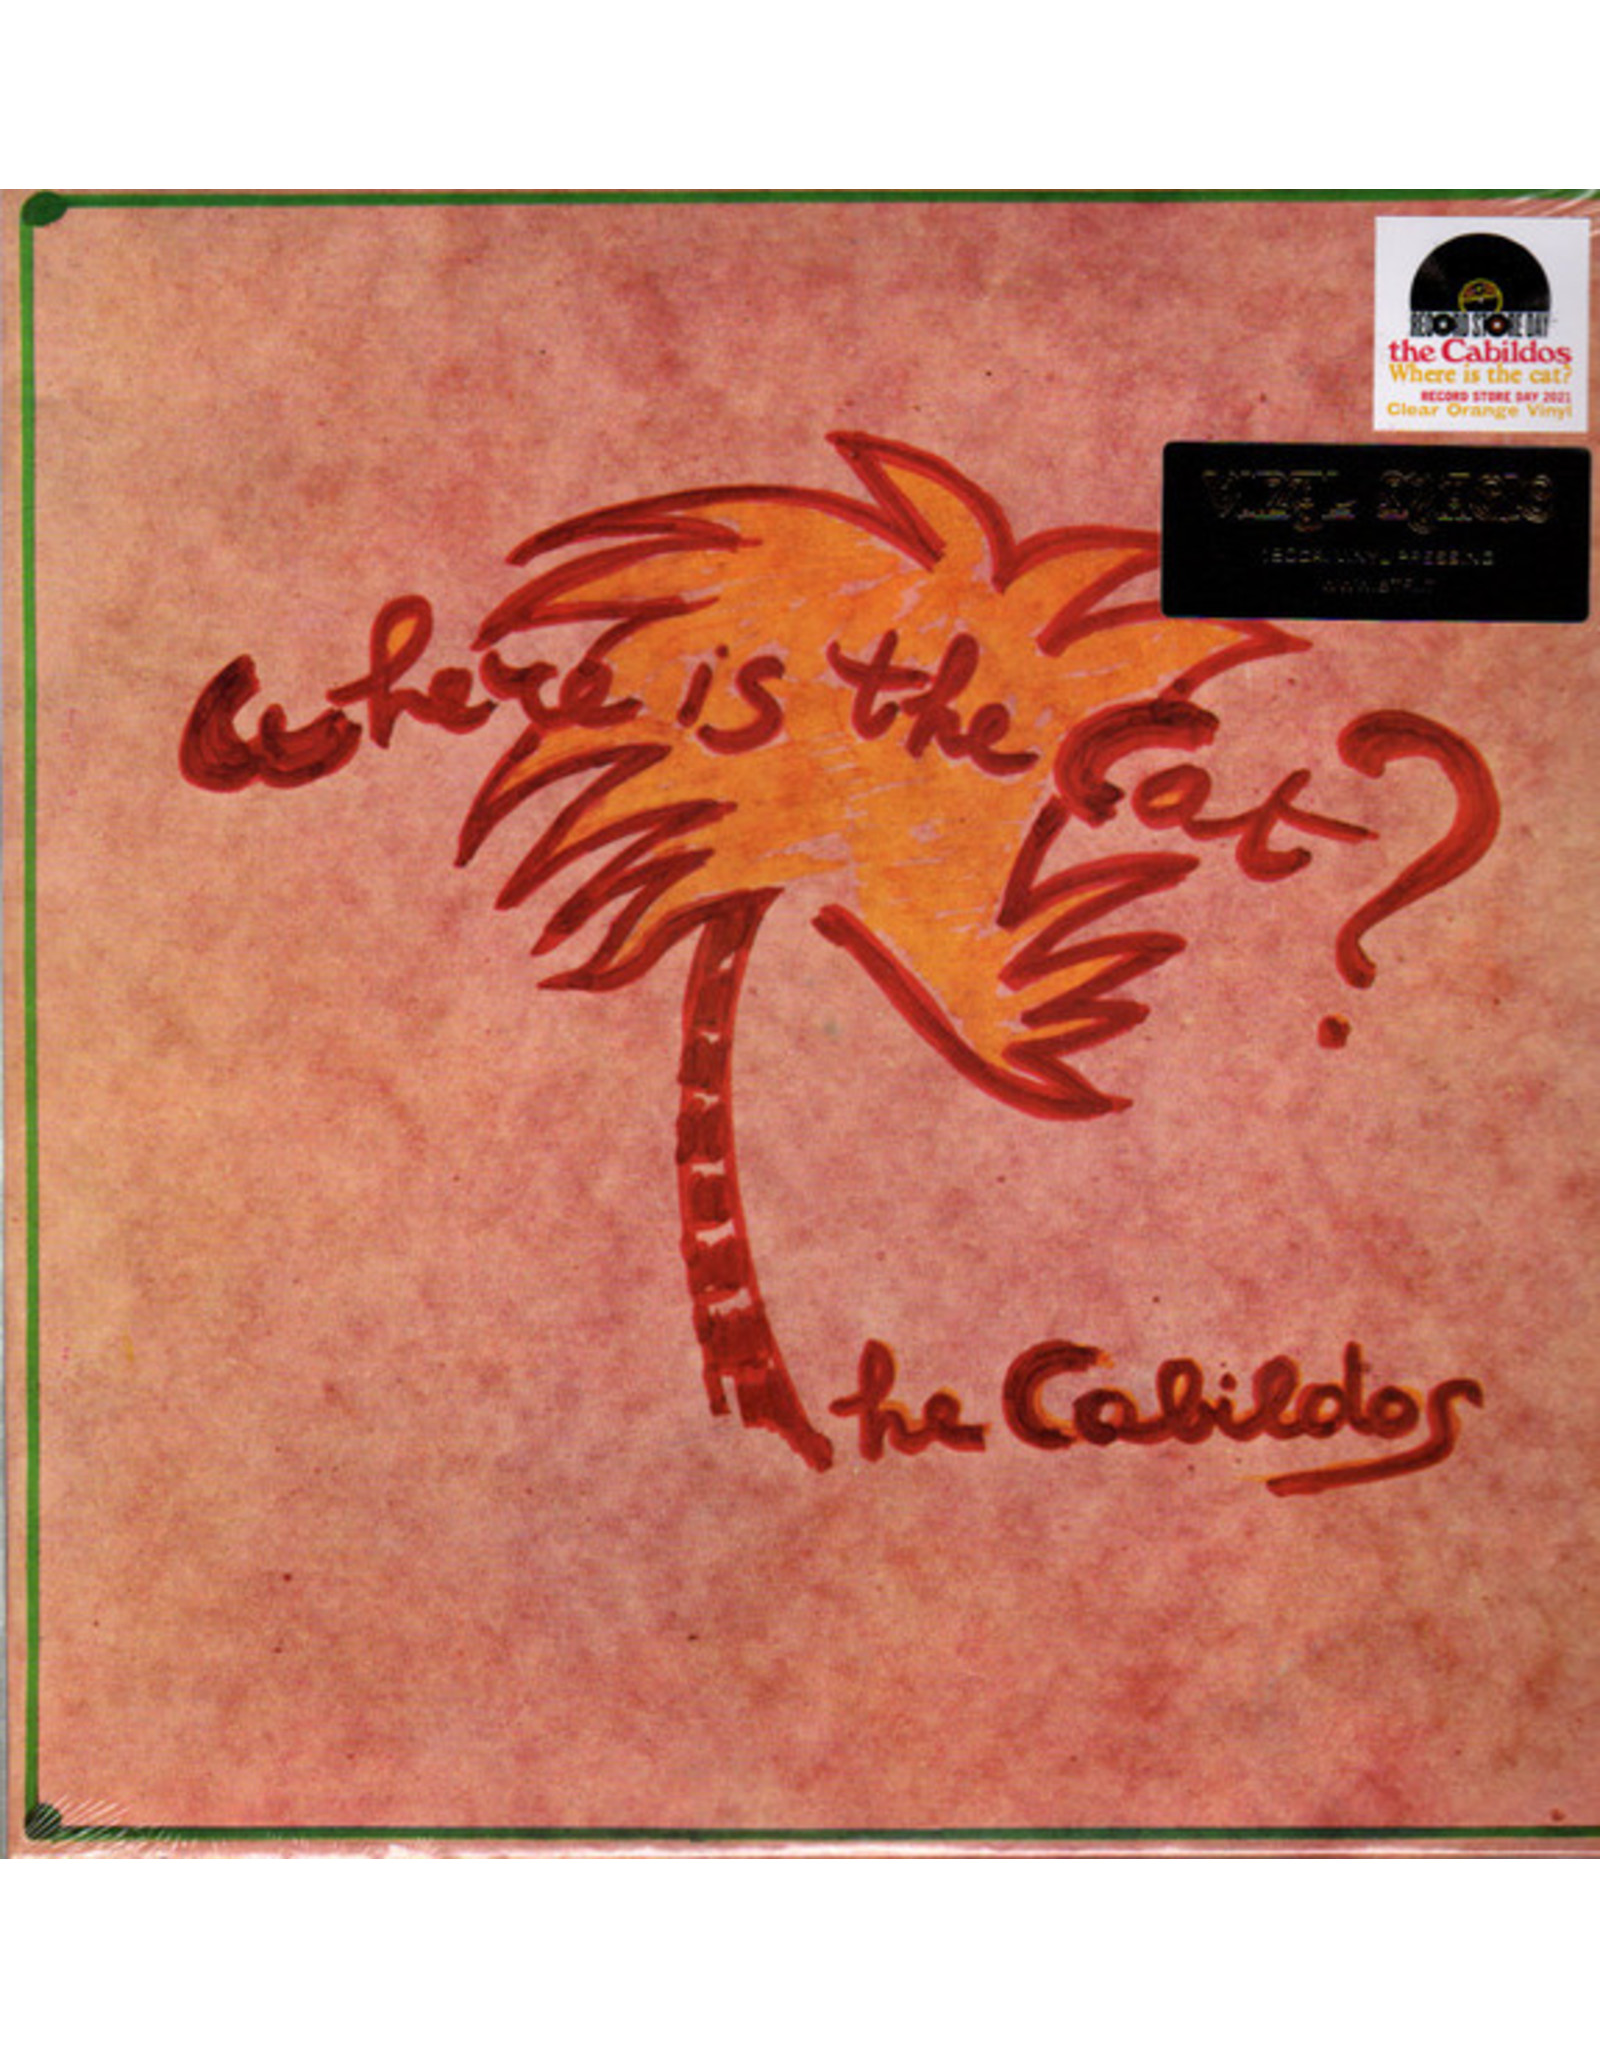 New Vinyl The Cabildos – Where Is The Cat? LP